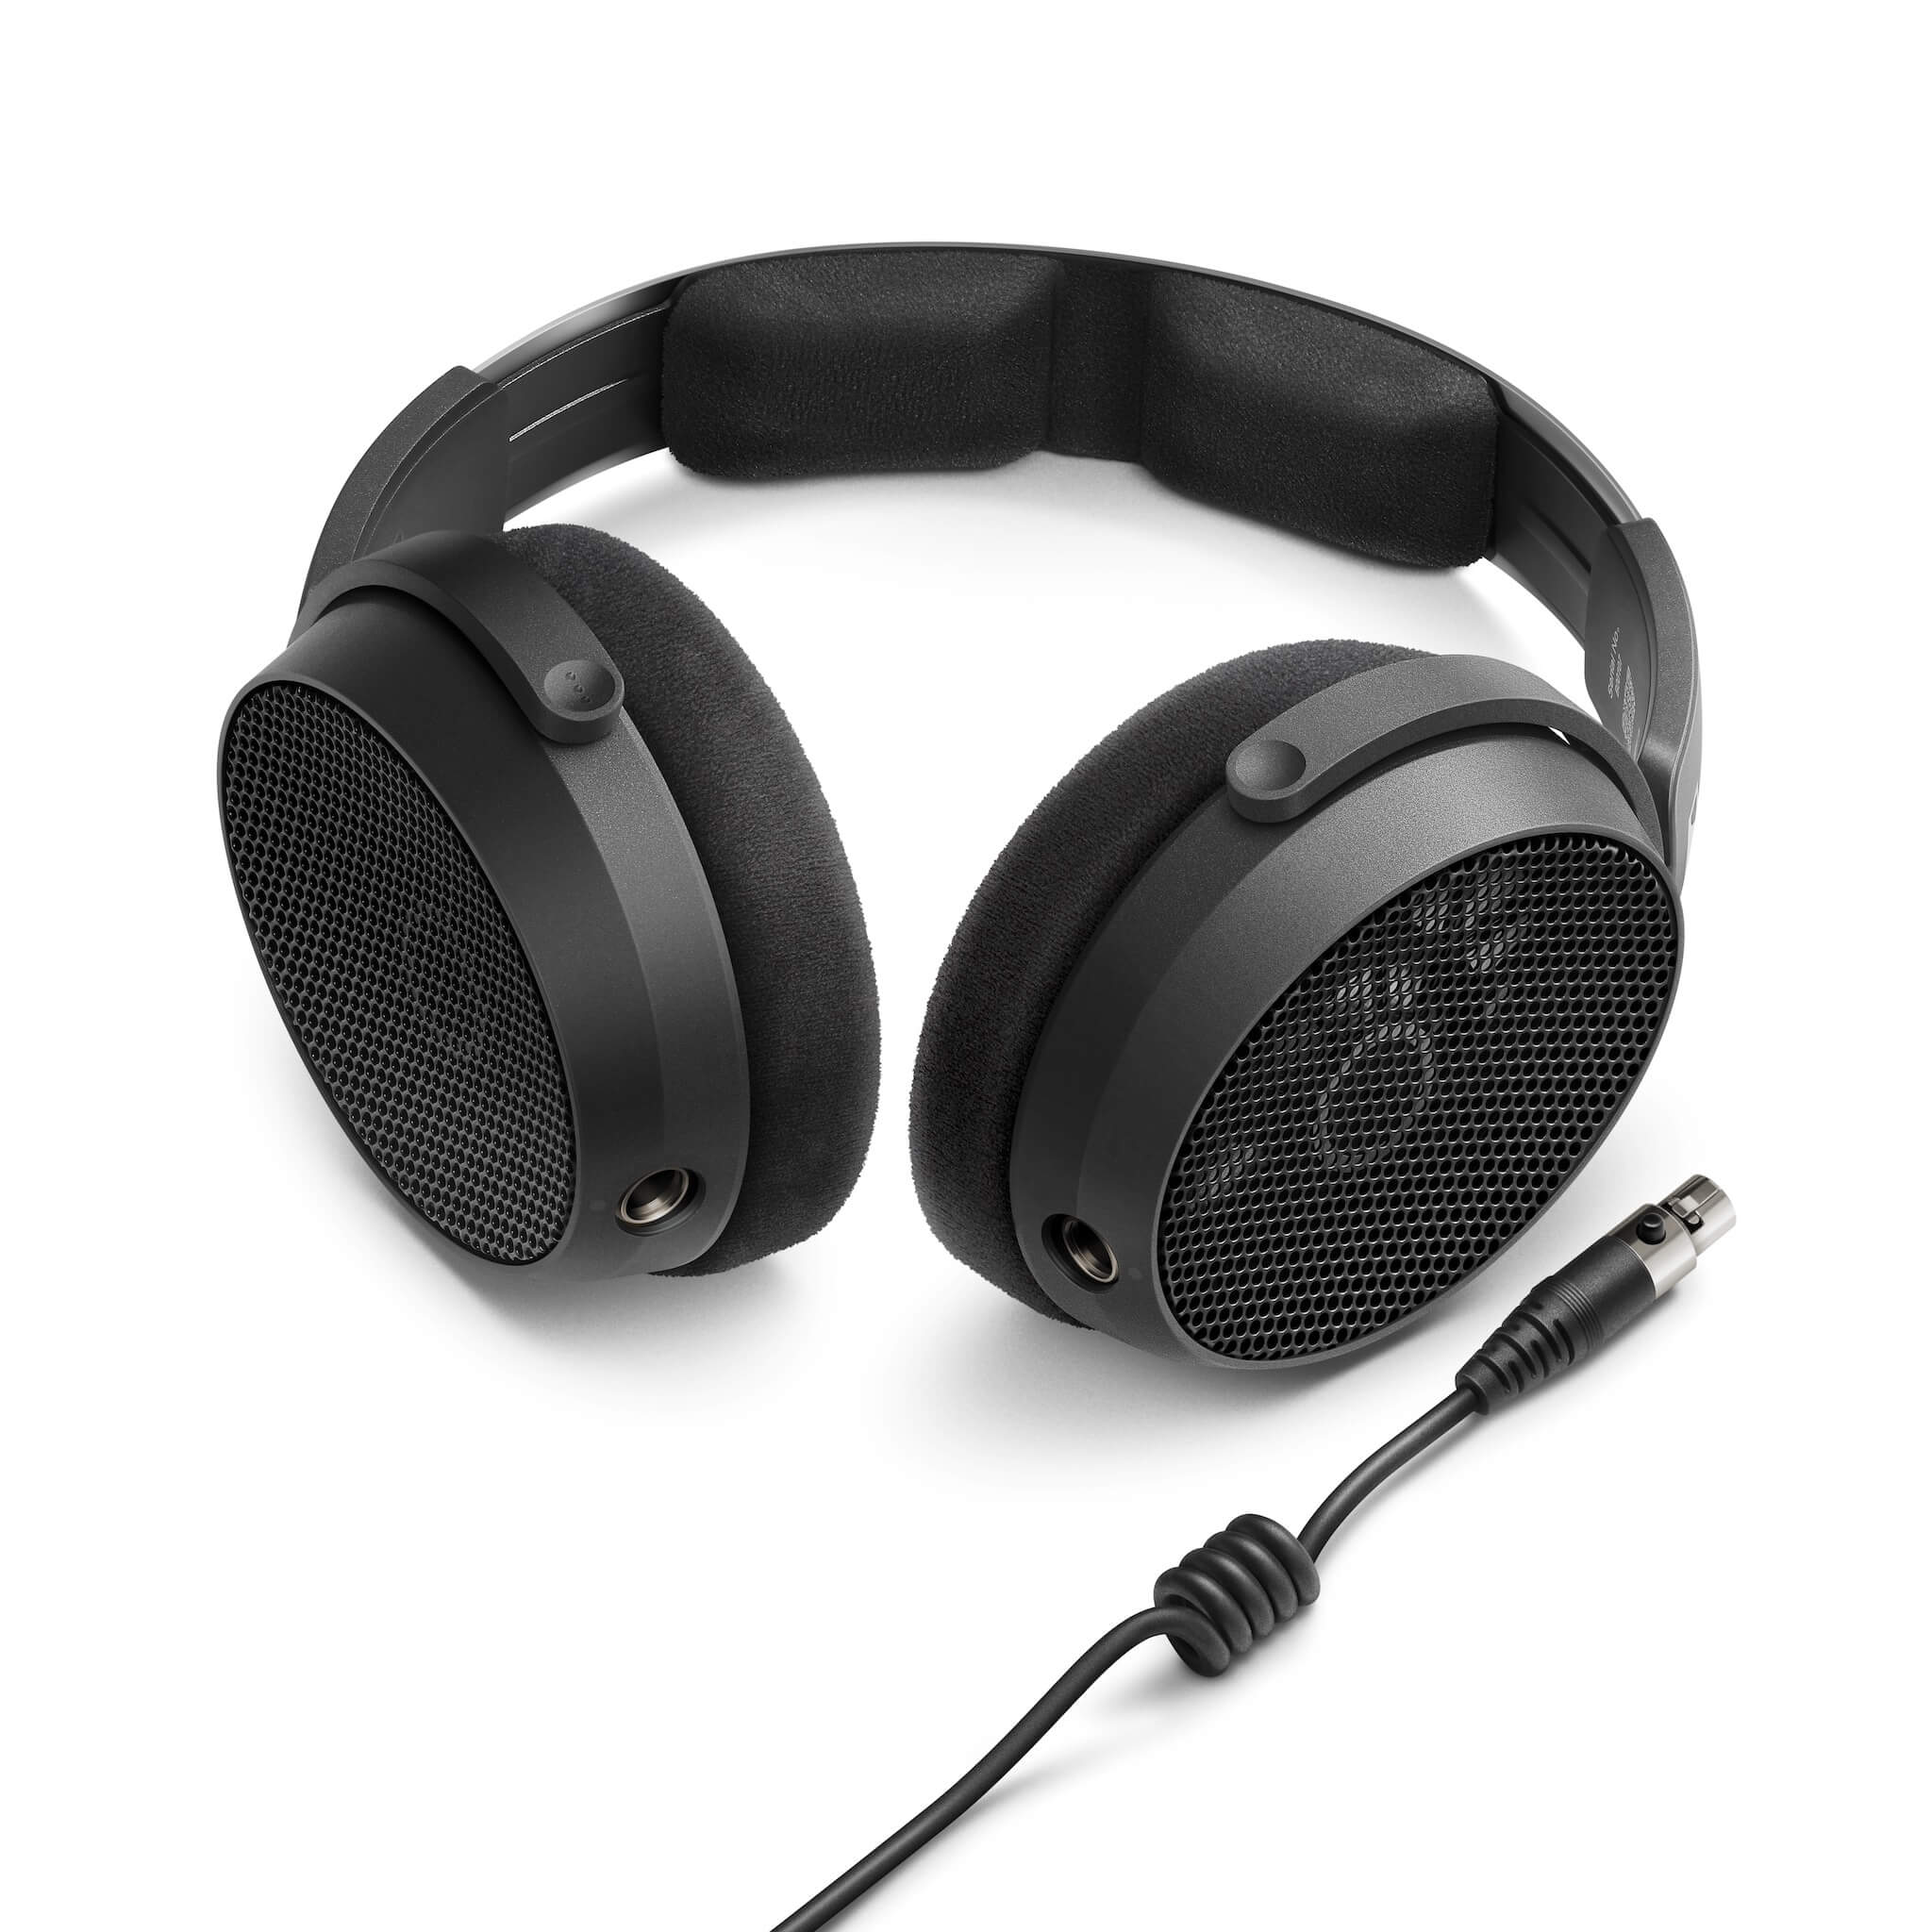 Sennheiser HD 490 PRO Headphones - The New Reference? 